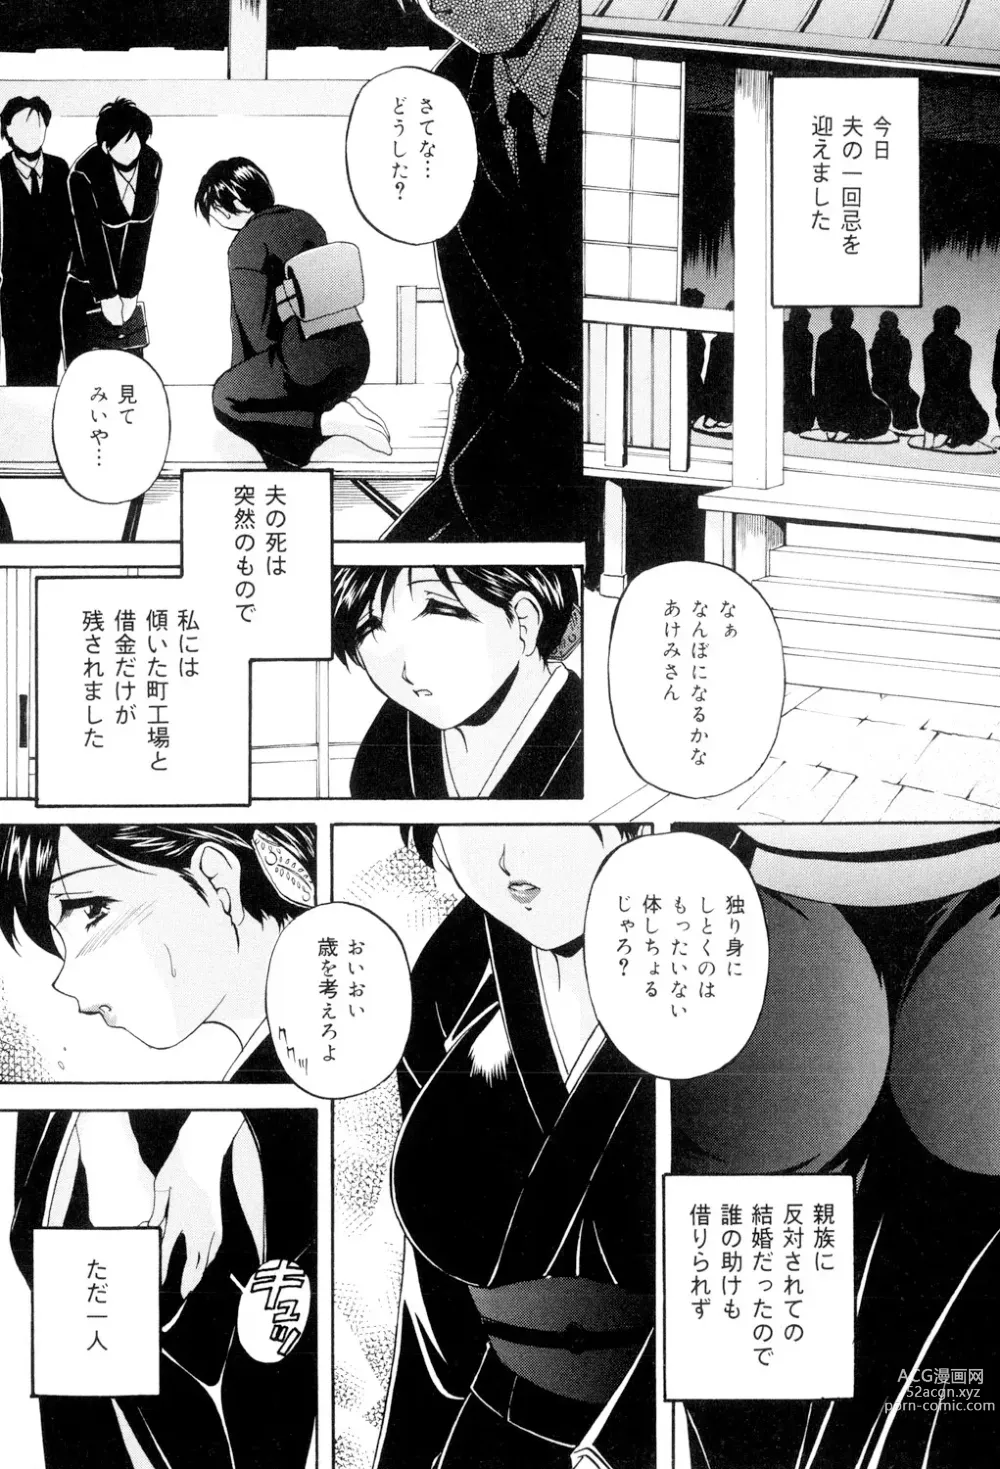 Page 3 of manga Aniyome no Himitsu